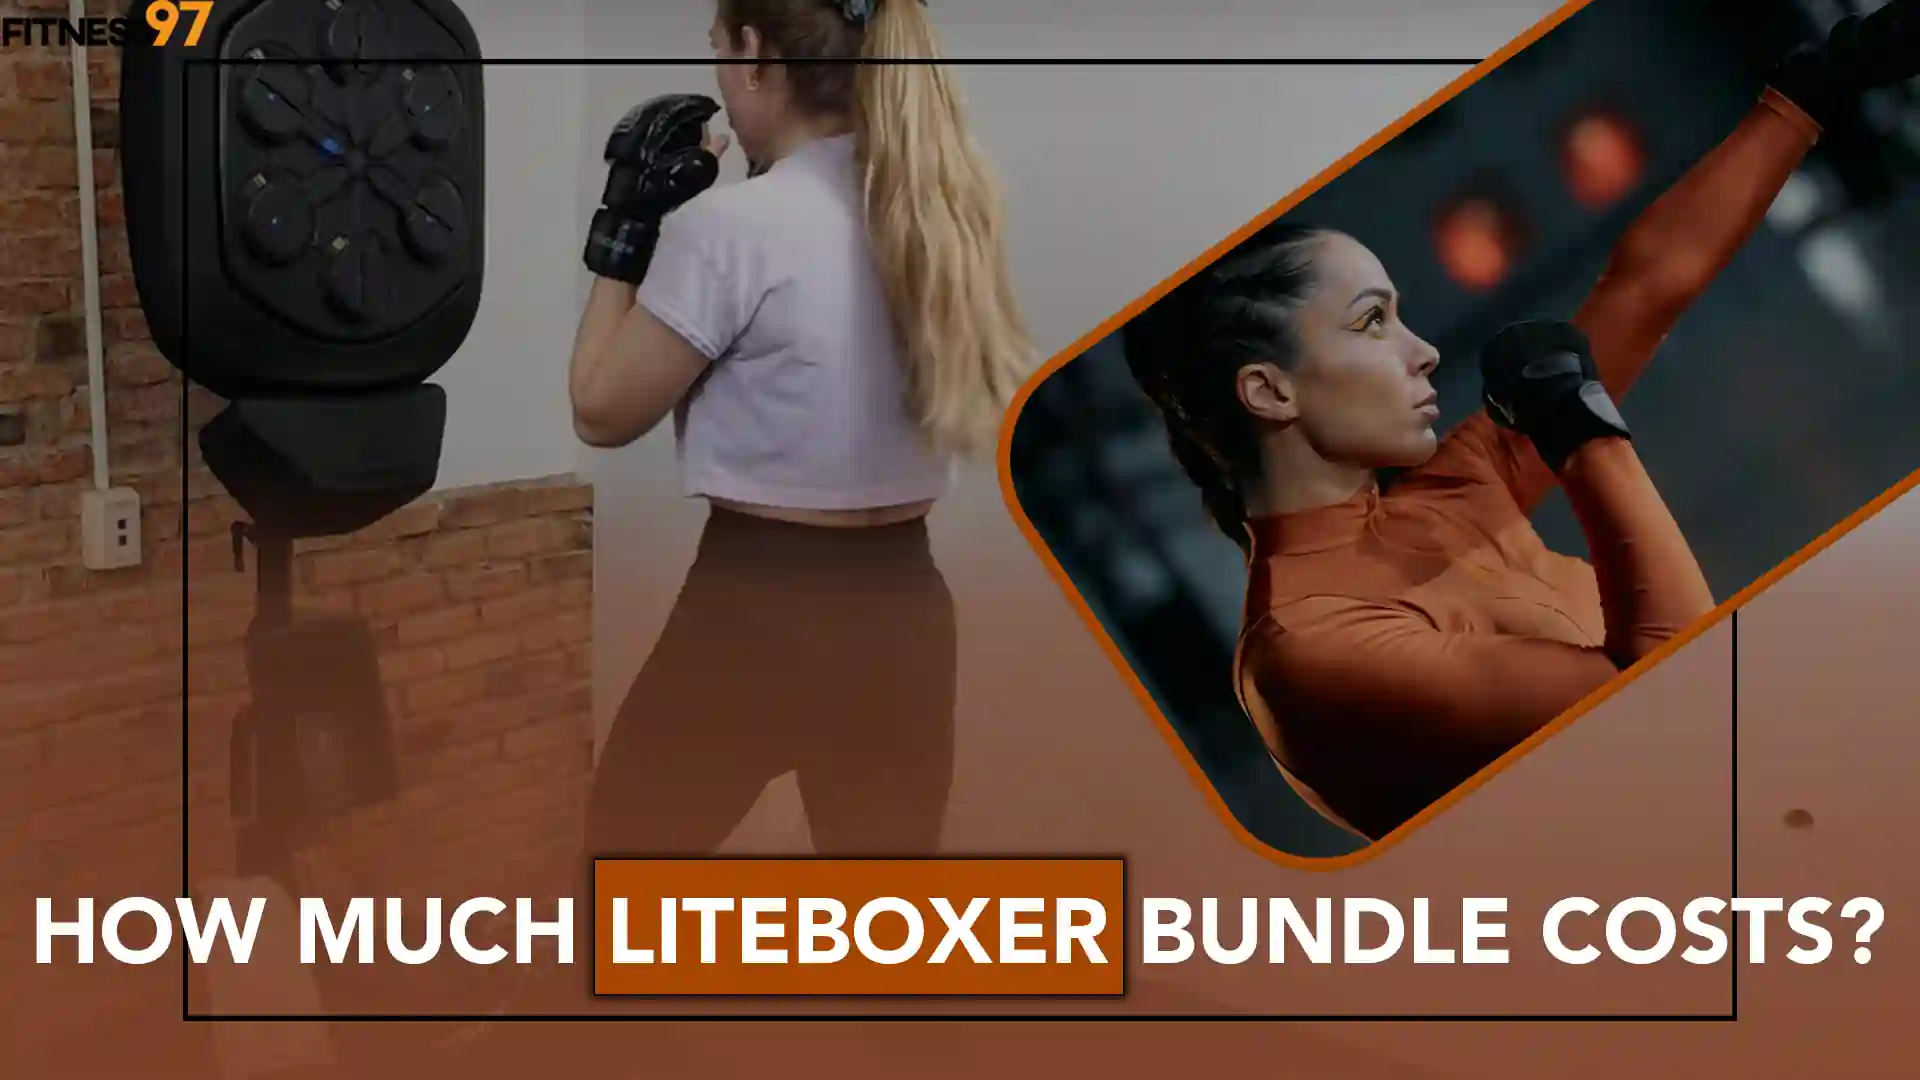 How much liteboxer bundle costs